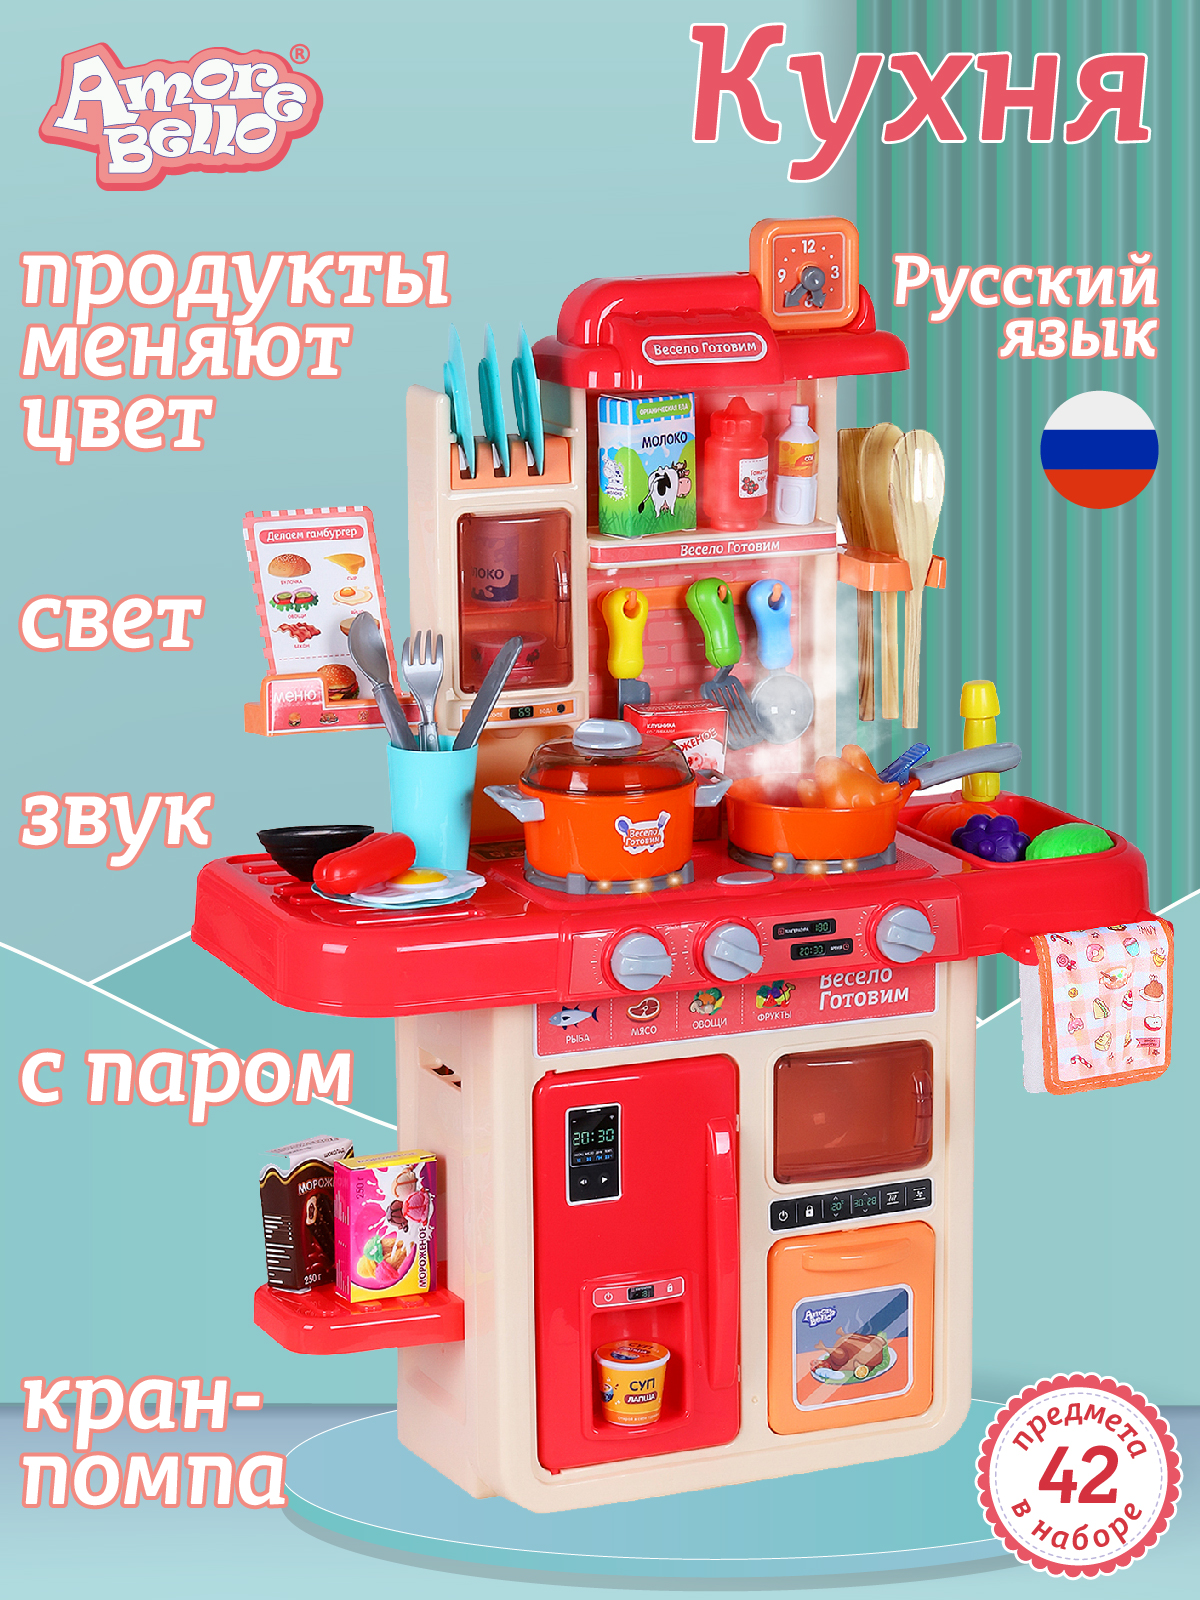 Детская кухня Amore Bello кухня, кран, игрушечная посуда JB0208741/без характеристик